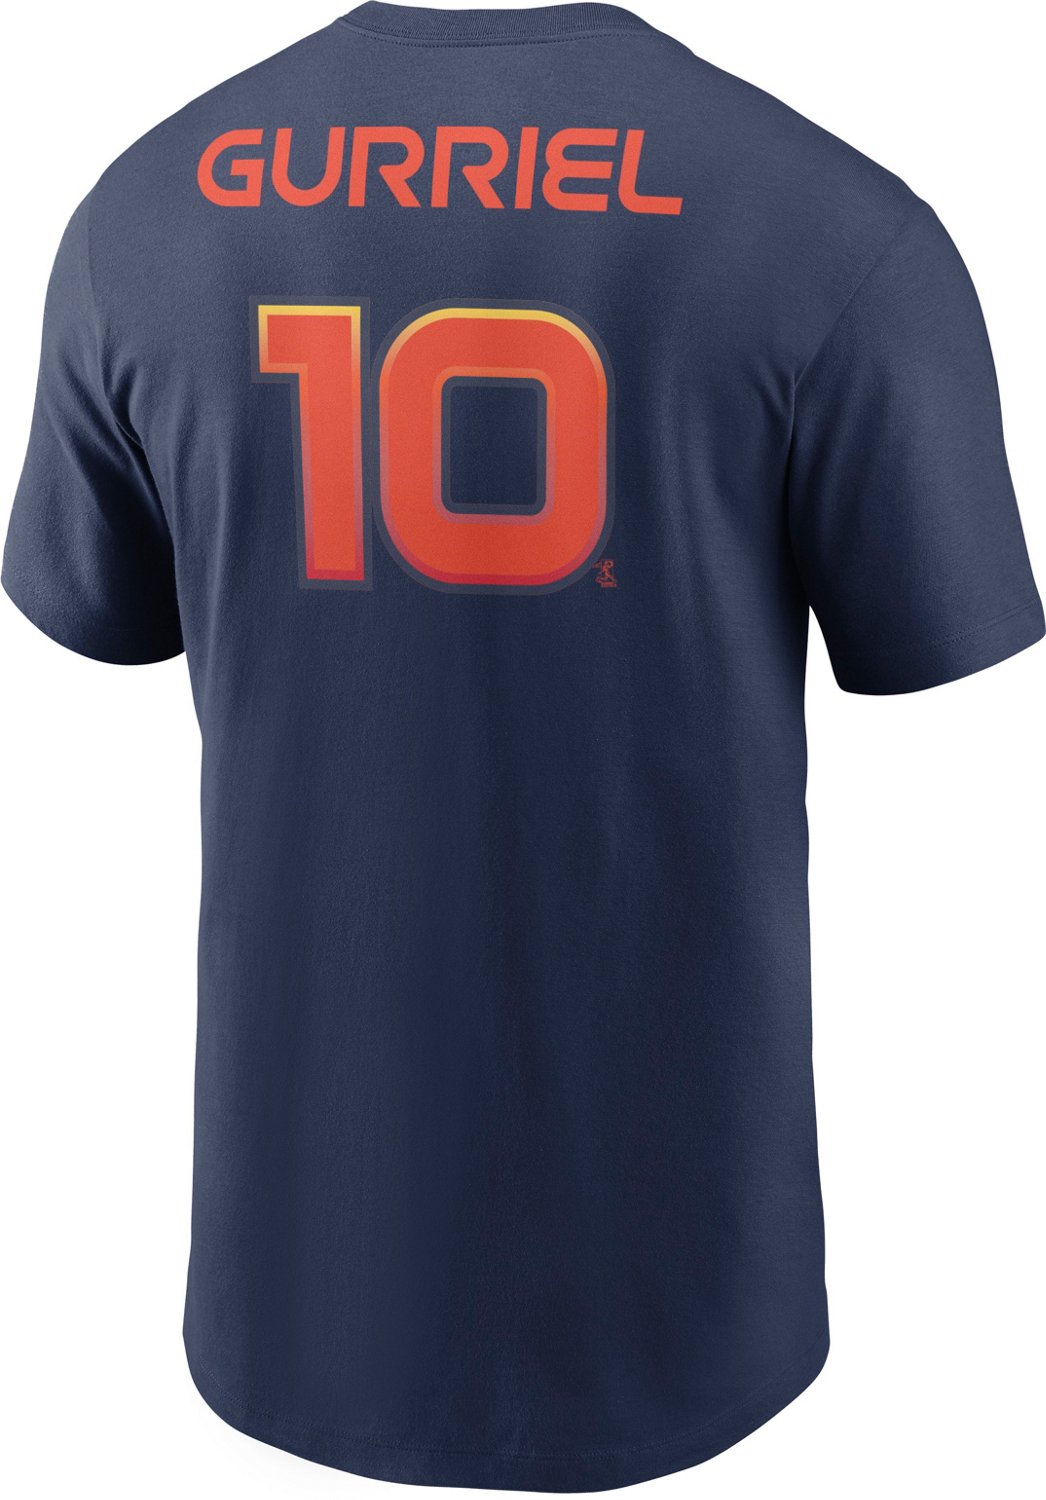 Number 10 Houston Astros YulI Gurriel baseball t-shirt - Kingteeshop